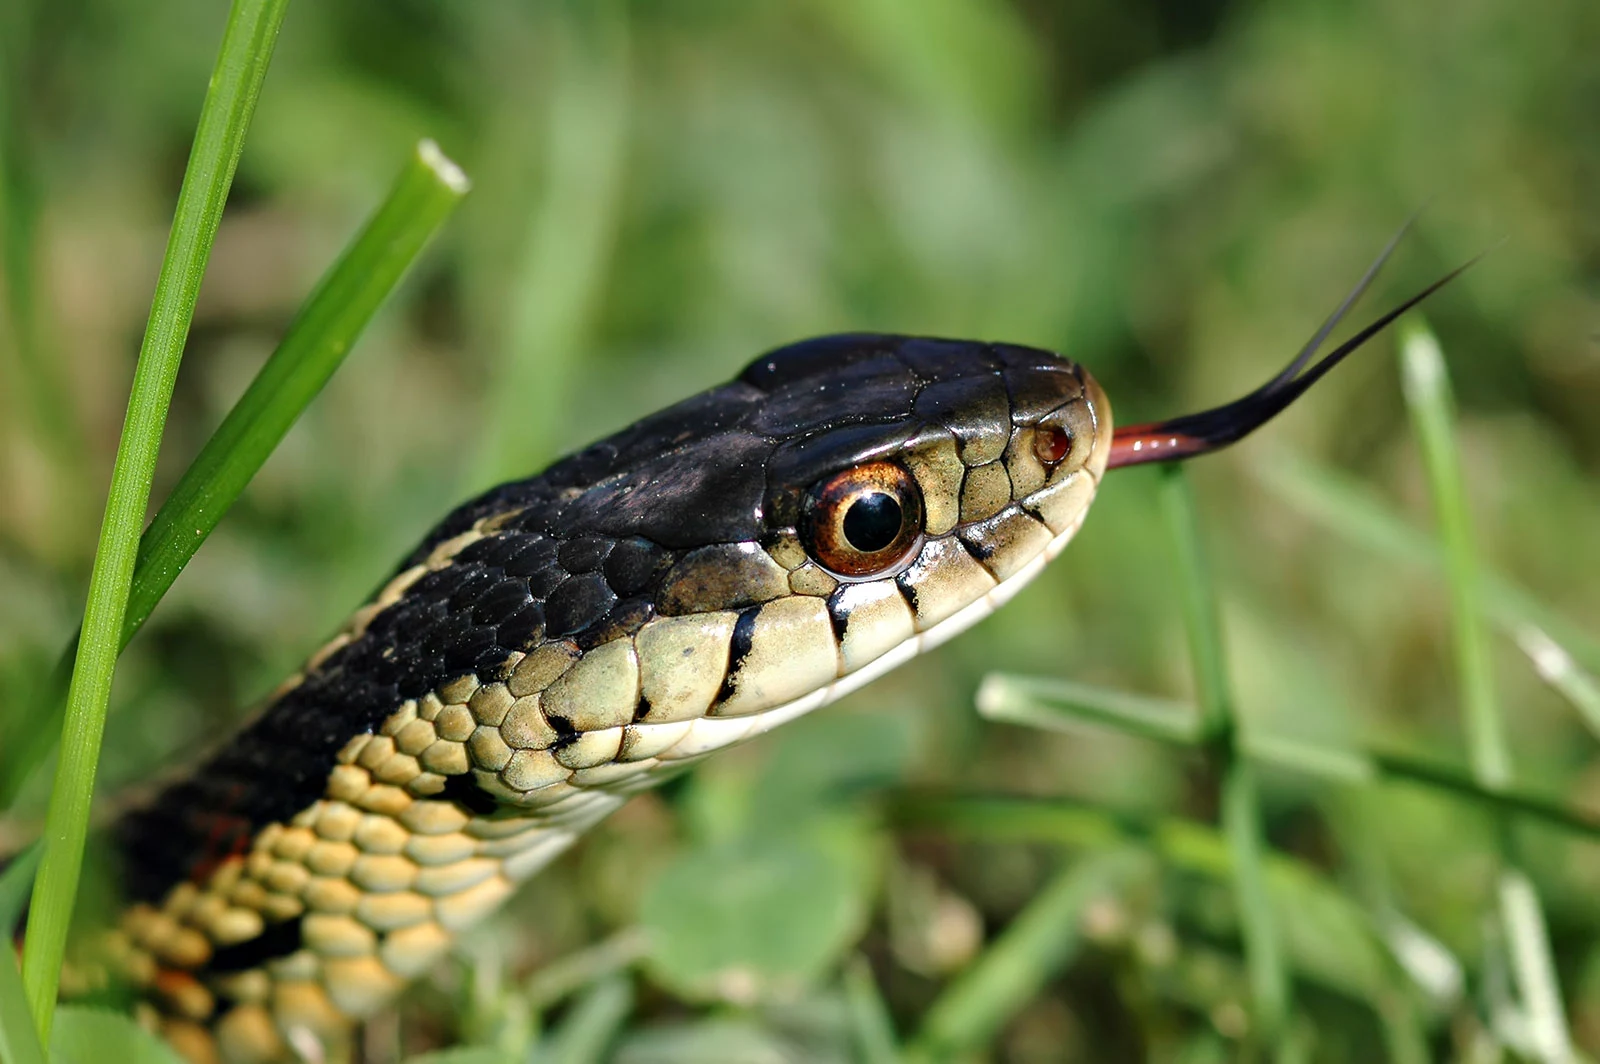 snake slithering in grass